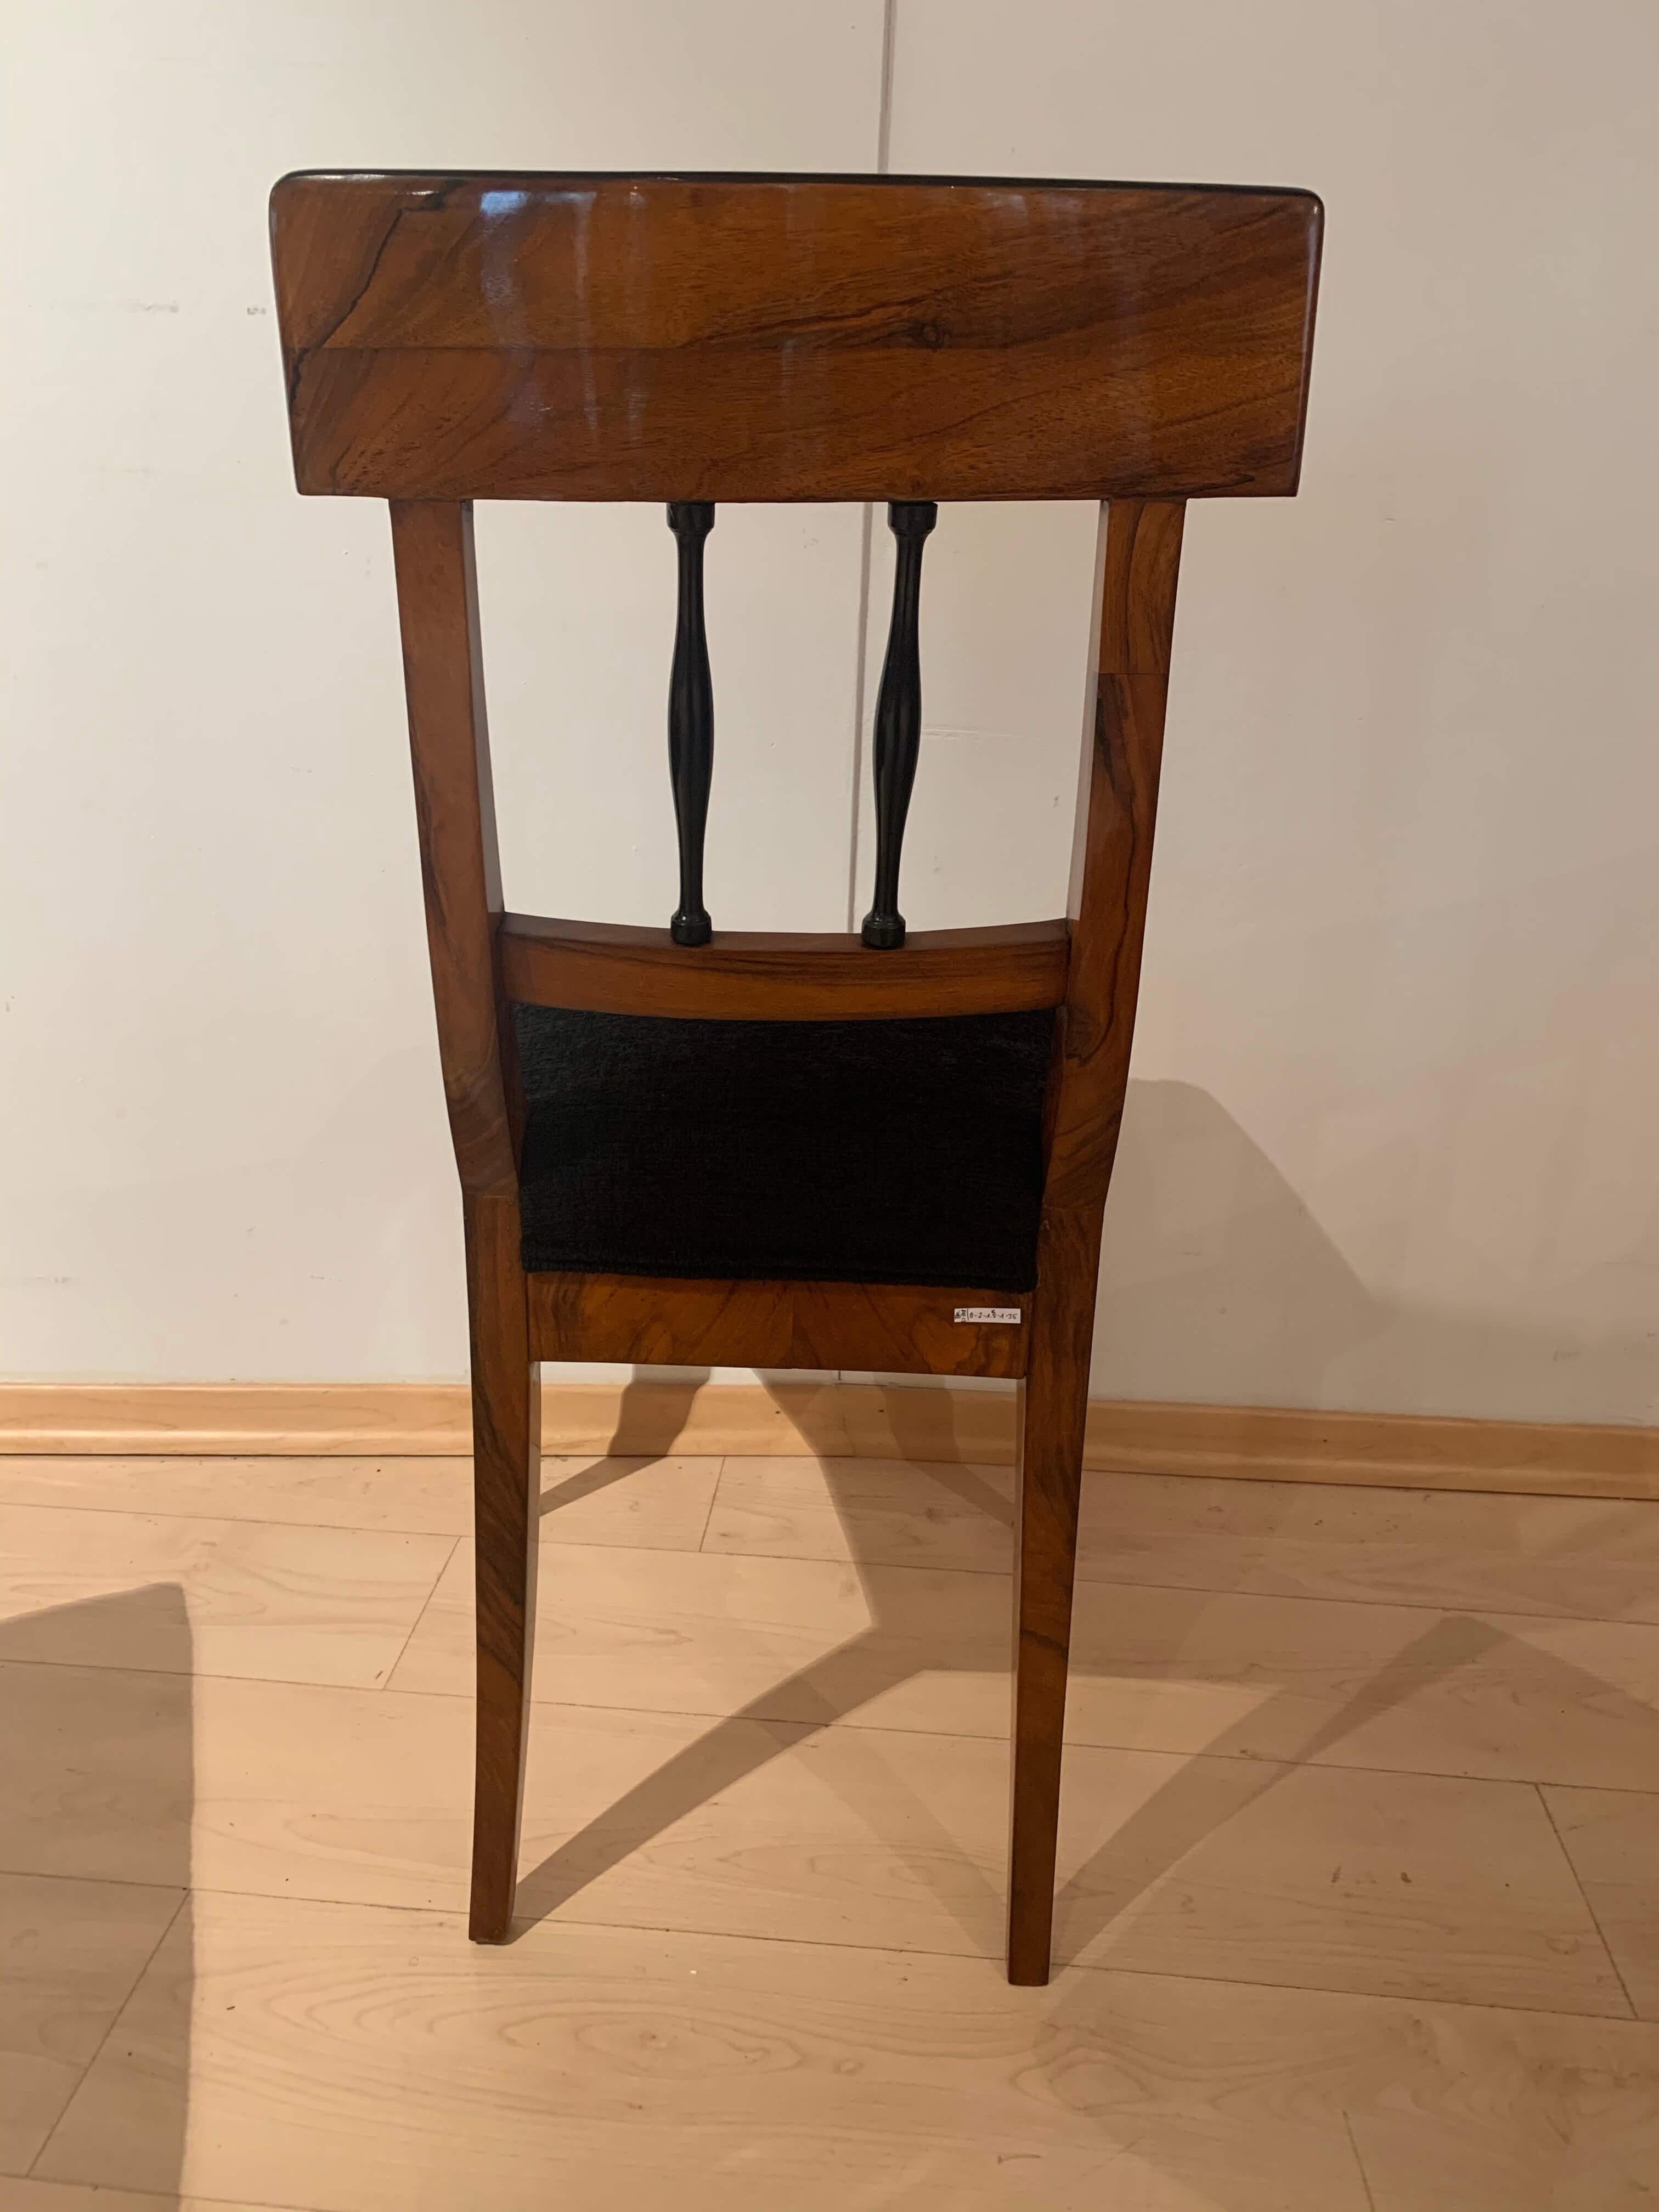 Early 19th Century Biedermeier Chair, Walnut Veneer, Black Velvet, South Germany, circa 1820